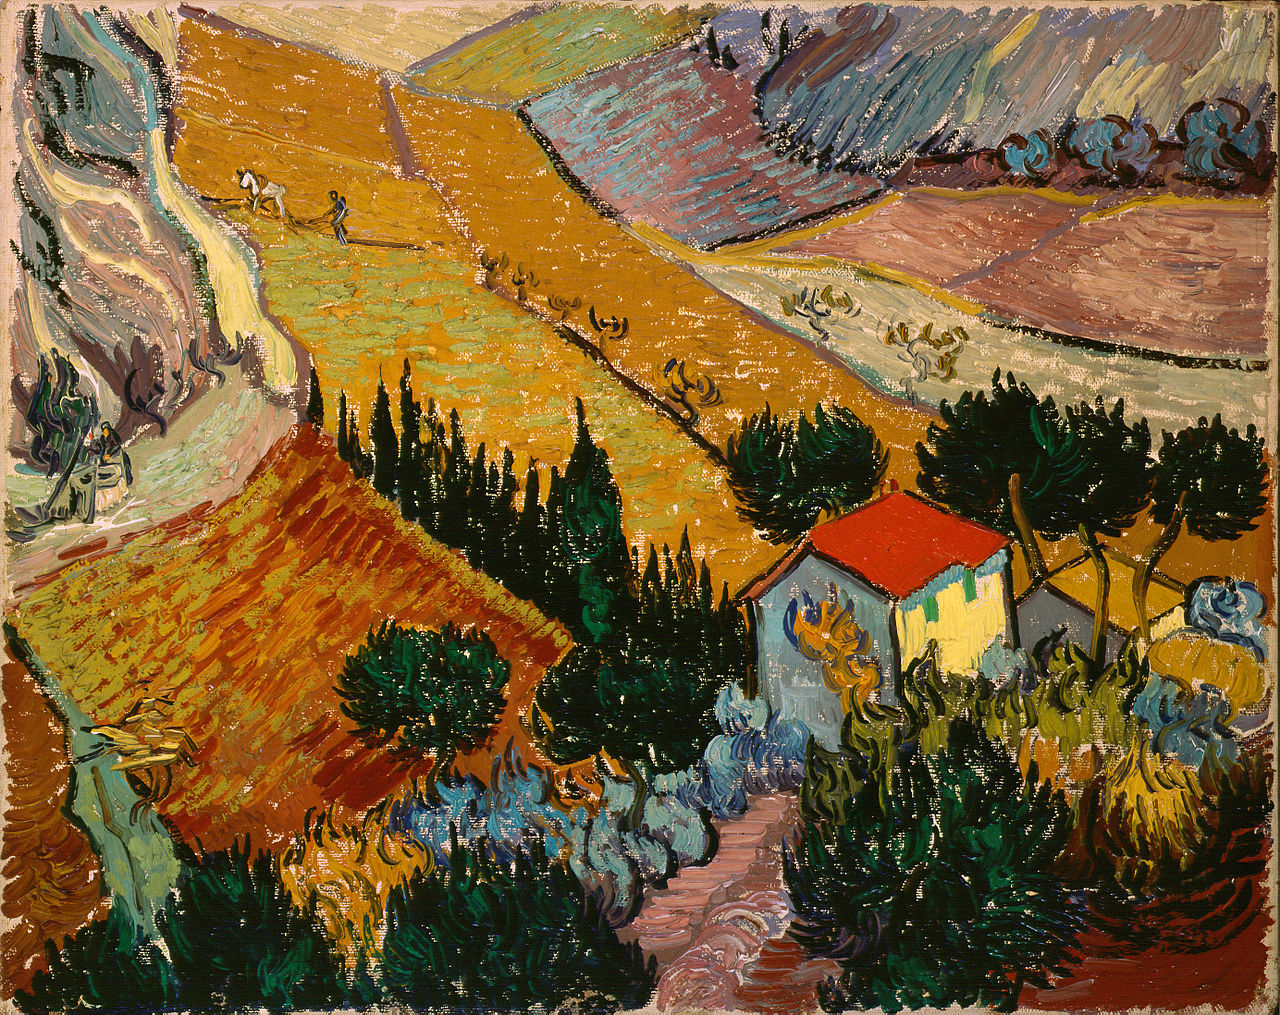 Pejzaż z domem i oraczem by Vincent van Gogh - 1889 - 33 x 41.4 cm 